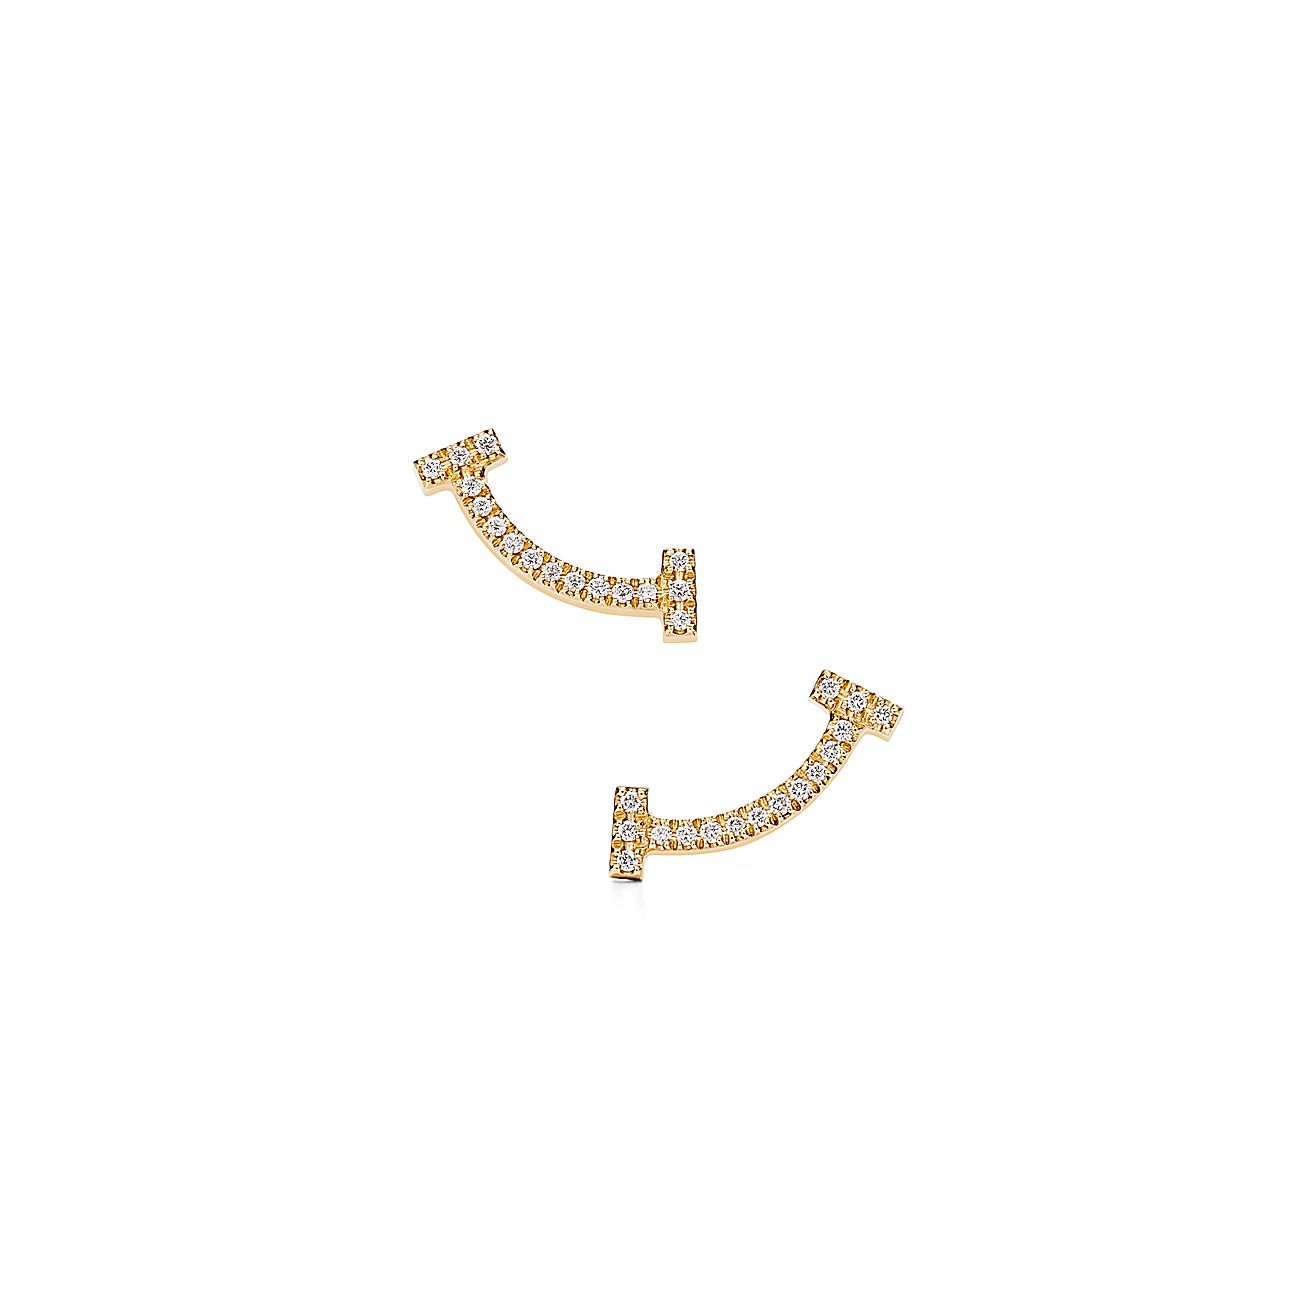 Tiffany T Smile Pendant and Earrings Set